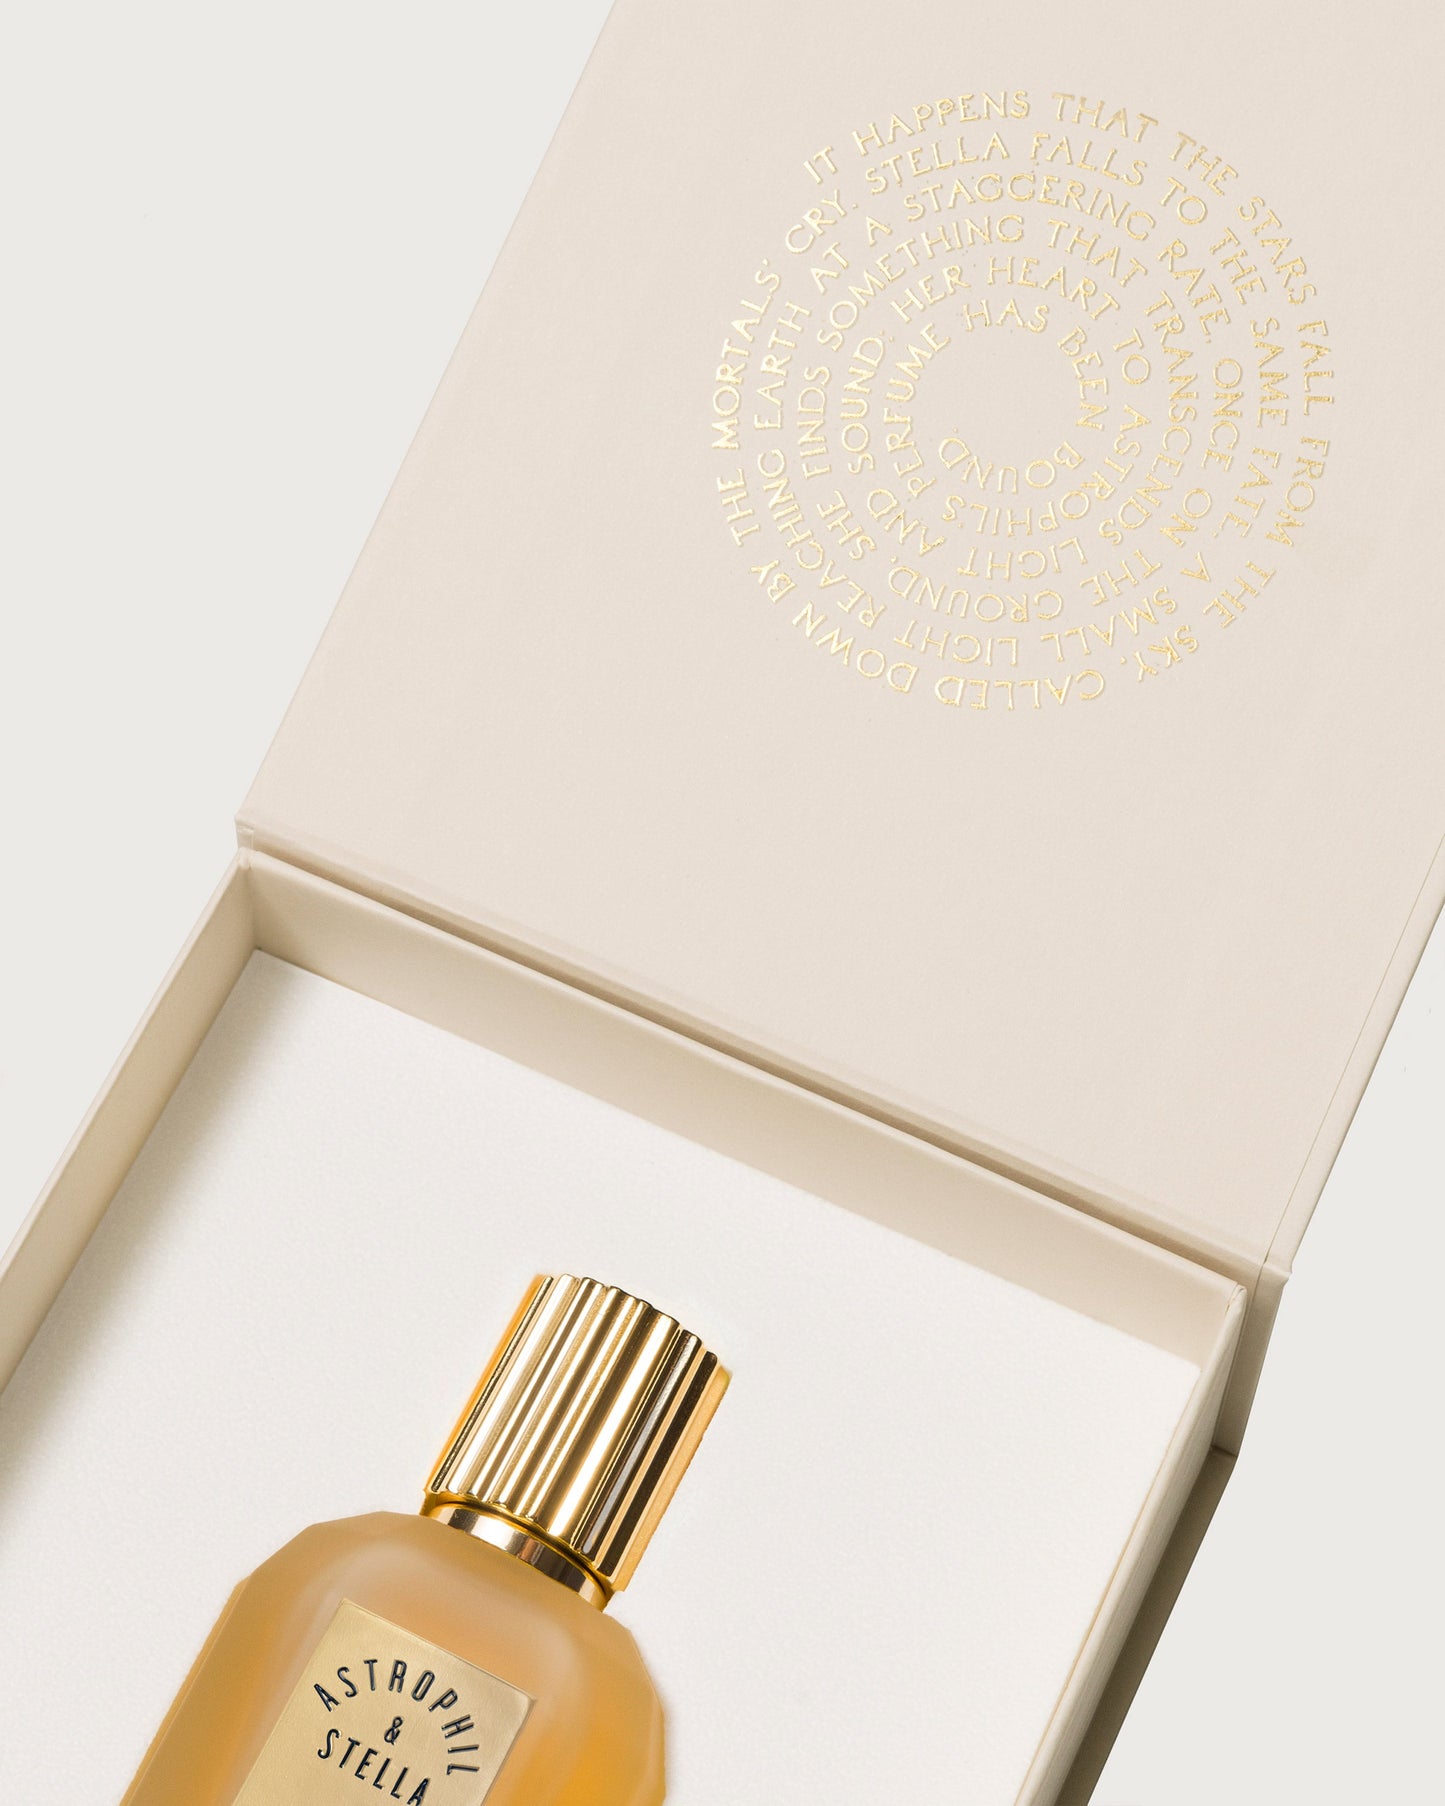 Paris Cheri Astrophil & Stella Extrait de Parfum Sample 2ml